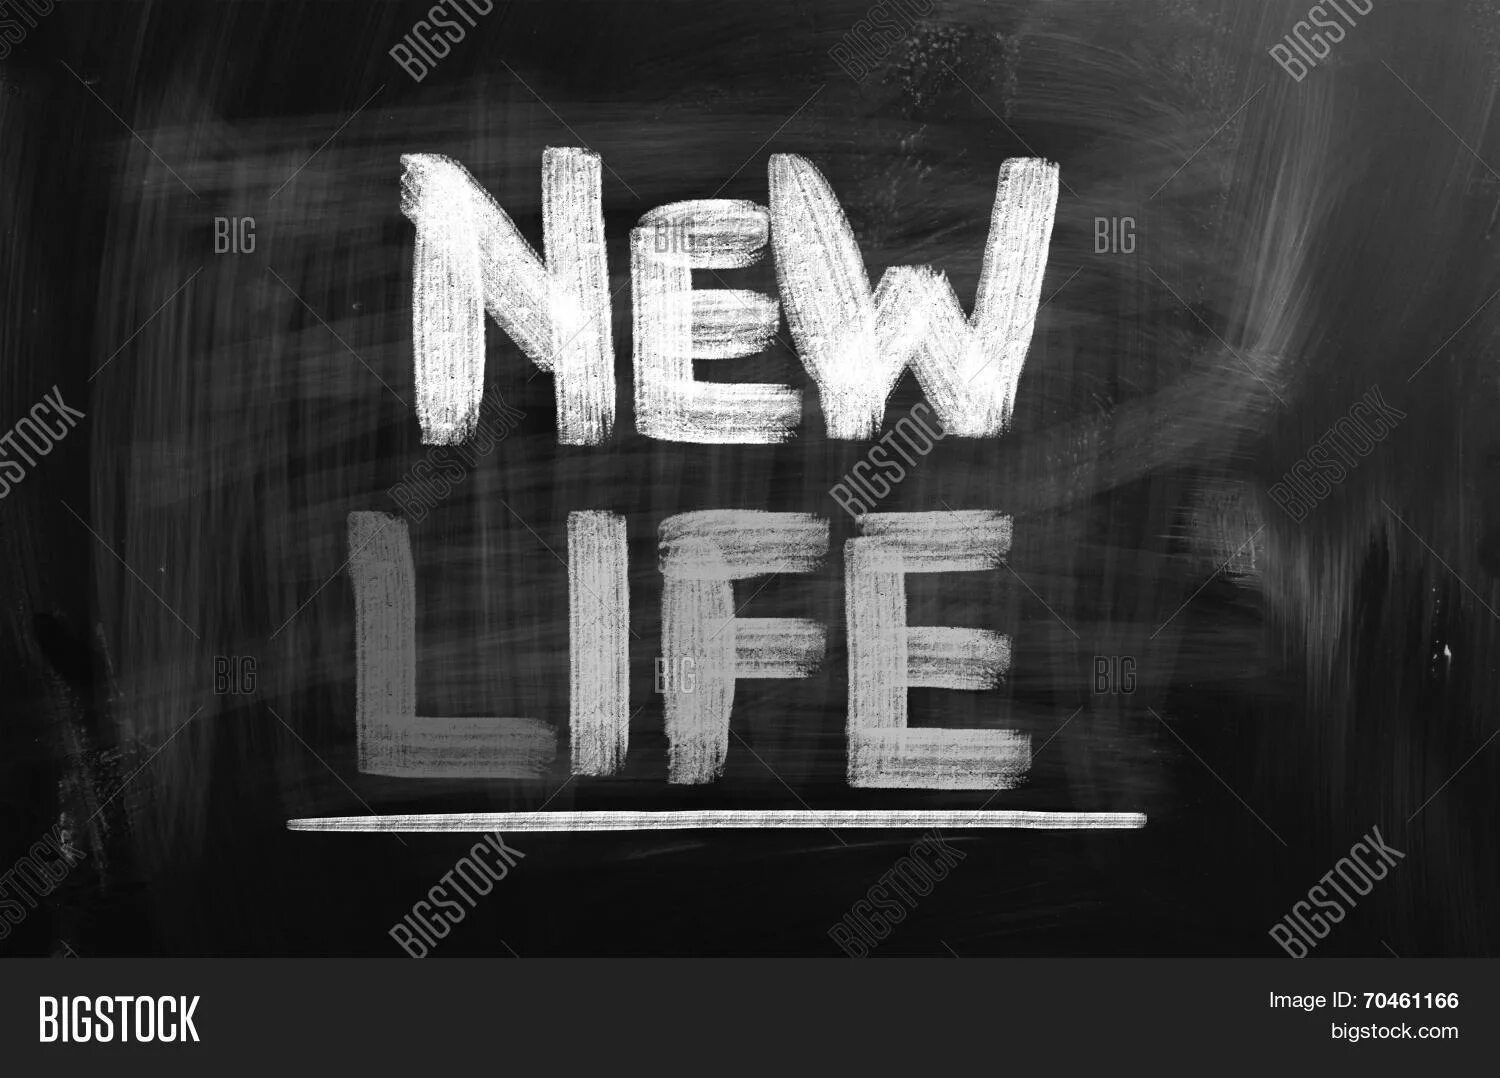 The New Life. Картинки лайф Нью. Happy New Life картинки. Надписью New Life фото. A new life bateman